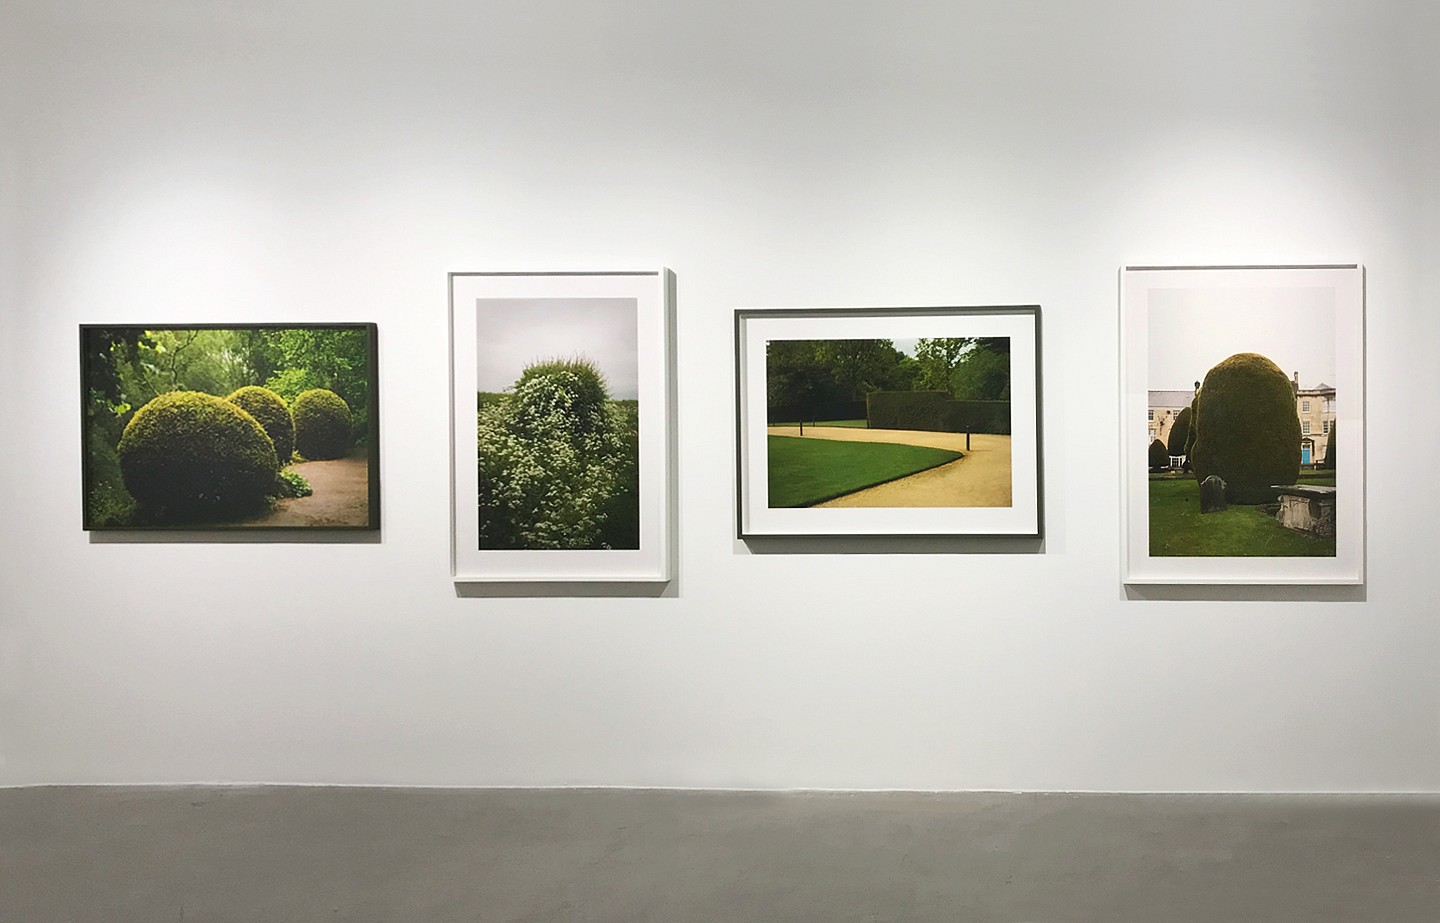 Susanna Howe
Installation, 2019
c-print photographs
HOWE005, HOWE003, HOWE004, HOWE001